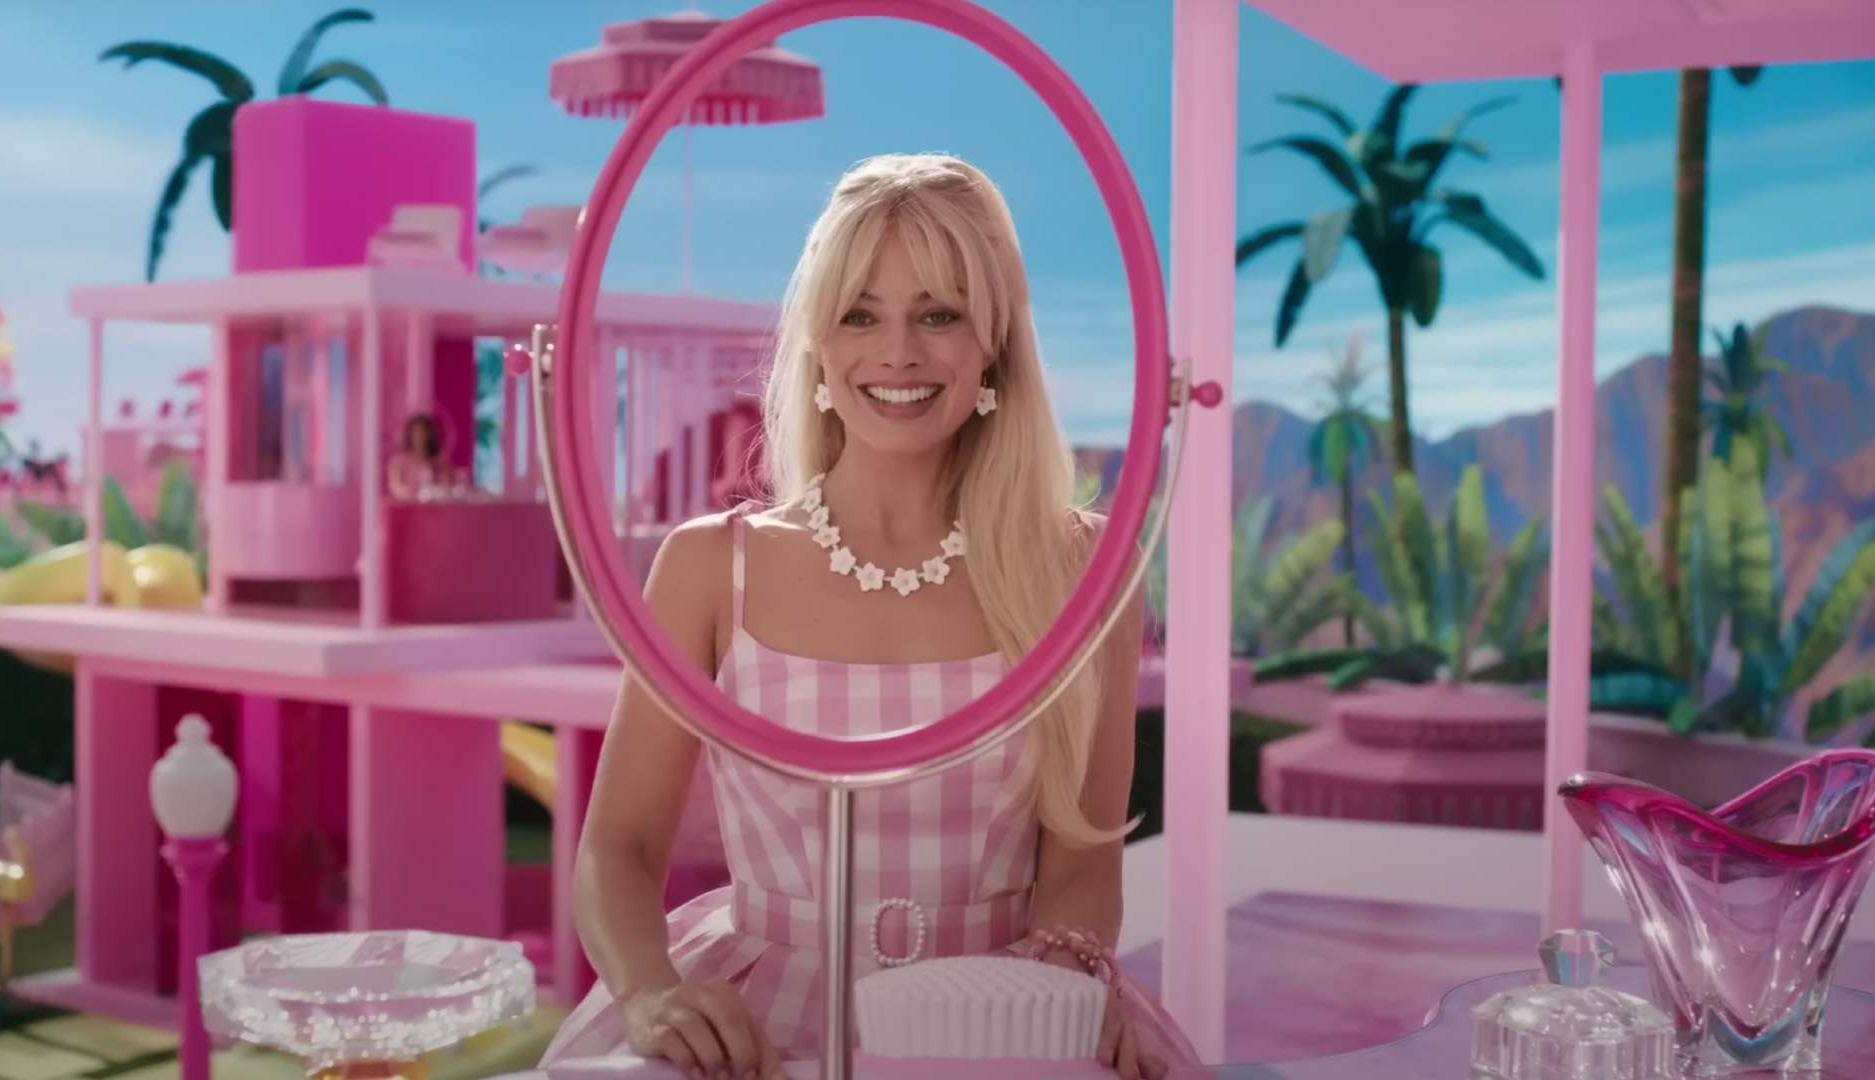 Fotograma de la película "Barbie"